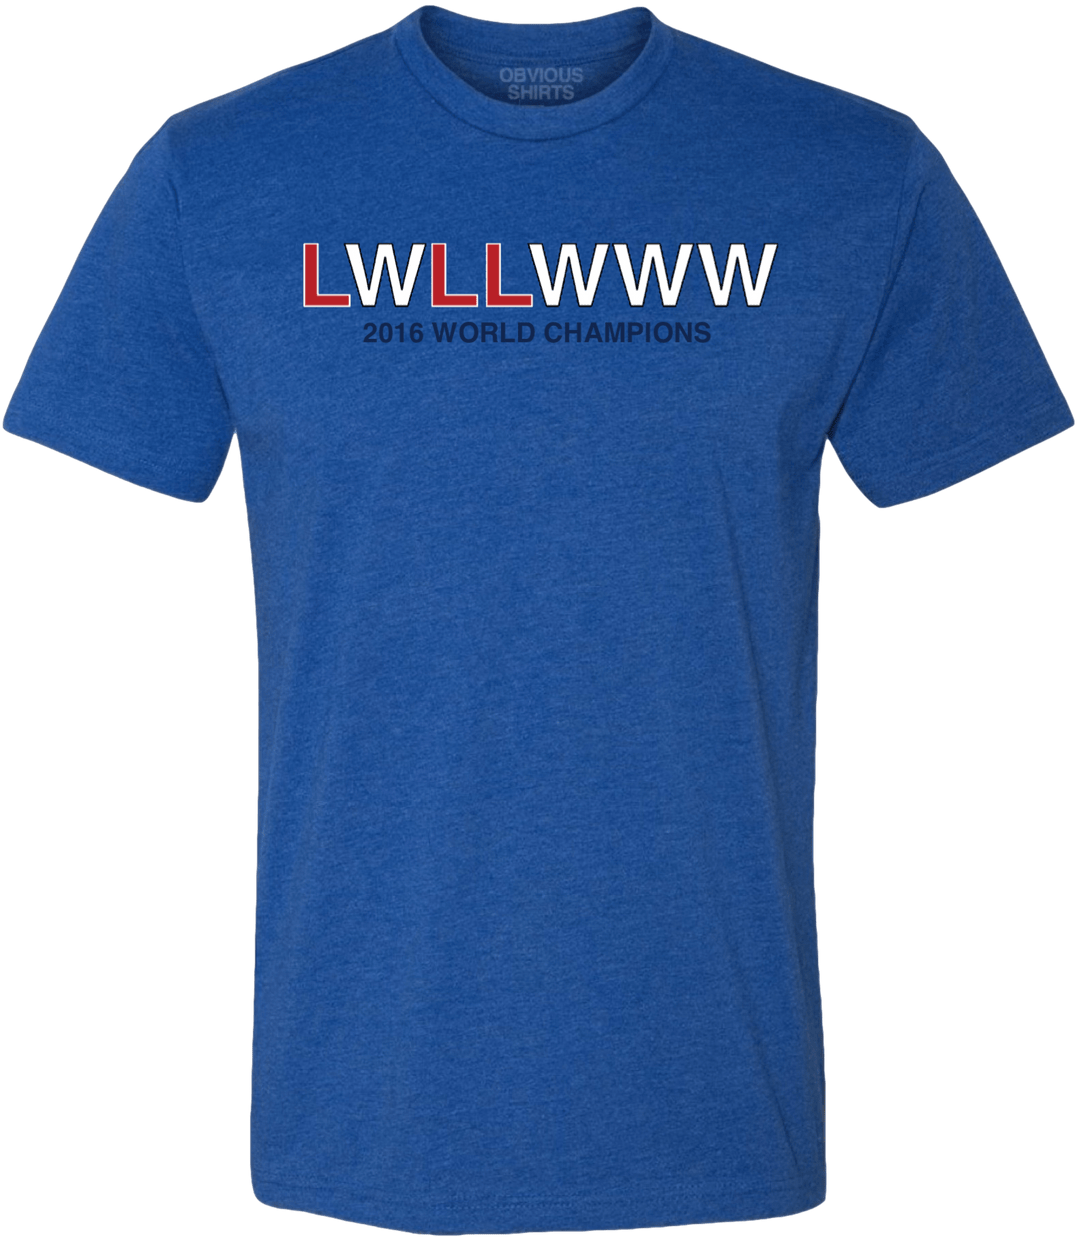 LWLLWWW. - OBVIOUS SHIRTS